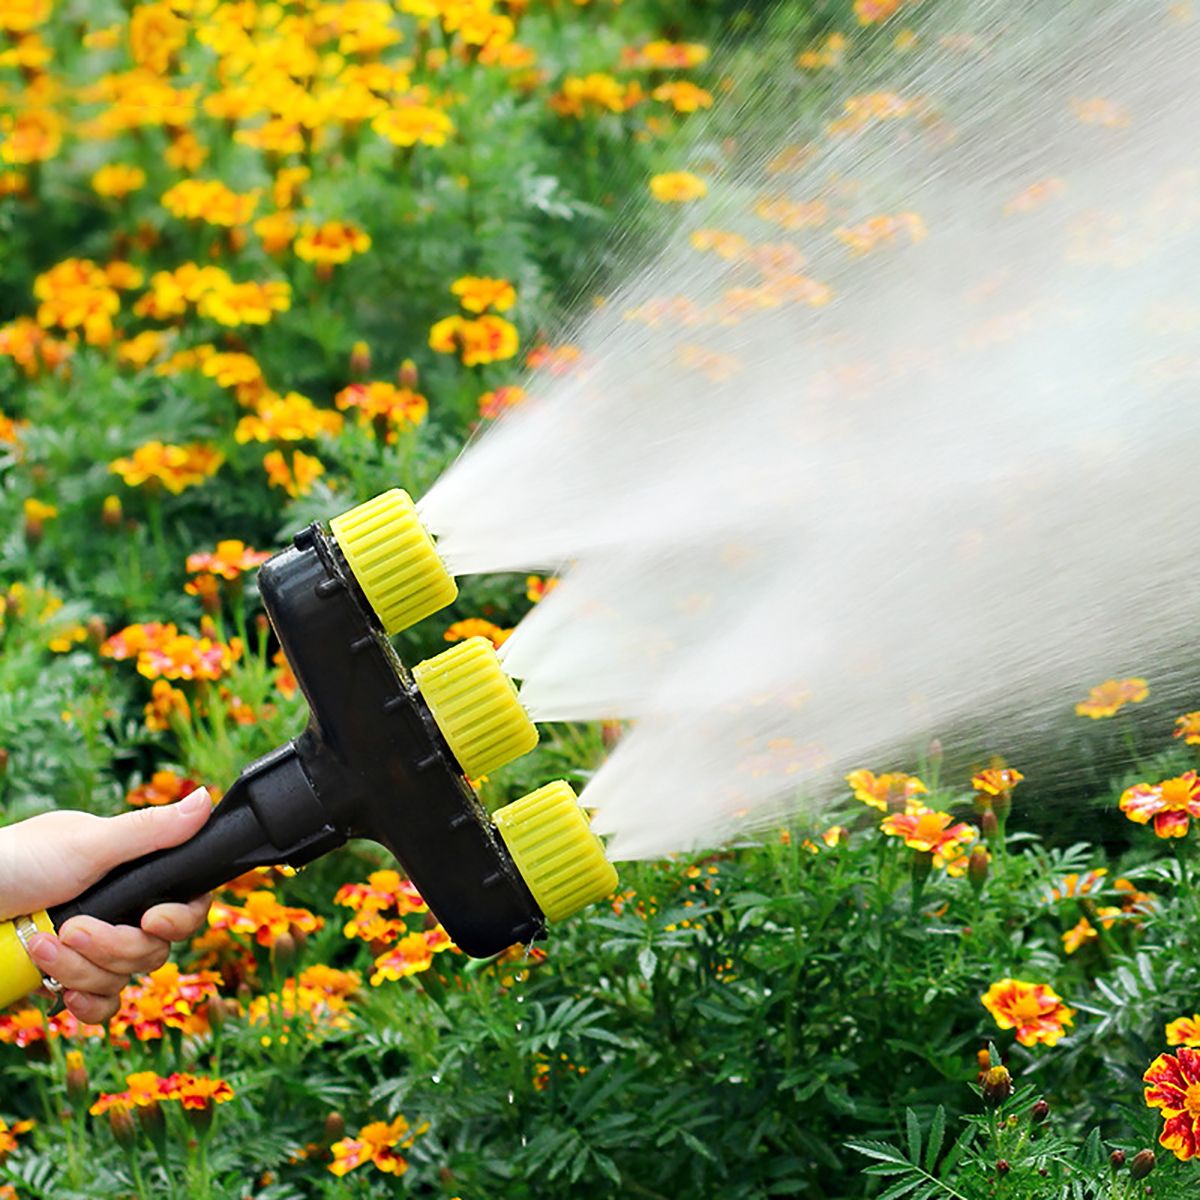 3456-Nozzles-Atomization-Drip-Water-Sprayer-Irrigation-Sprinkler-Kit-for-Agriculture-Lawn-Garden-Pat-1690428